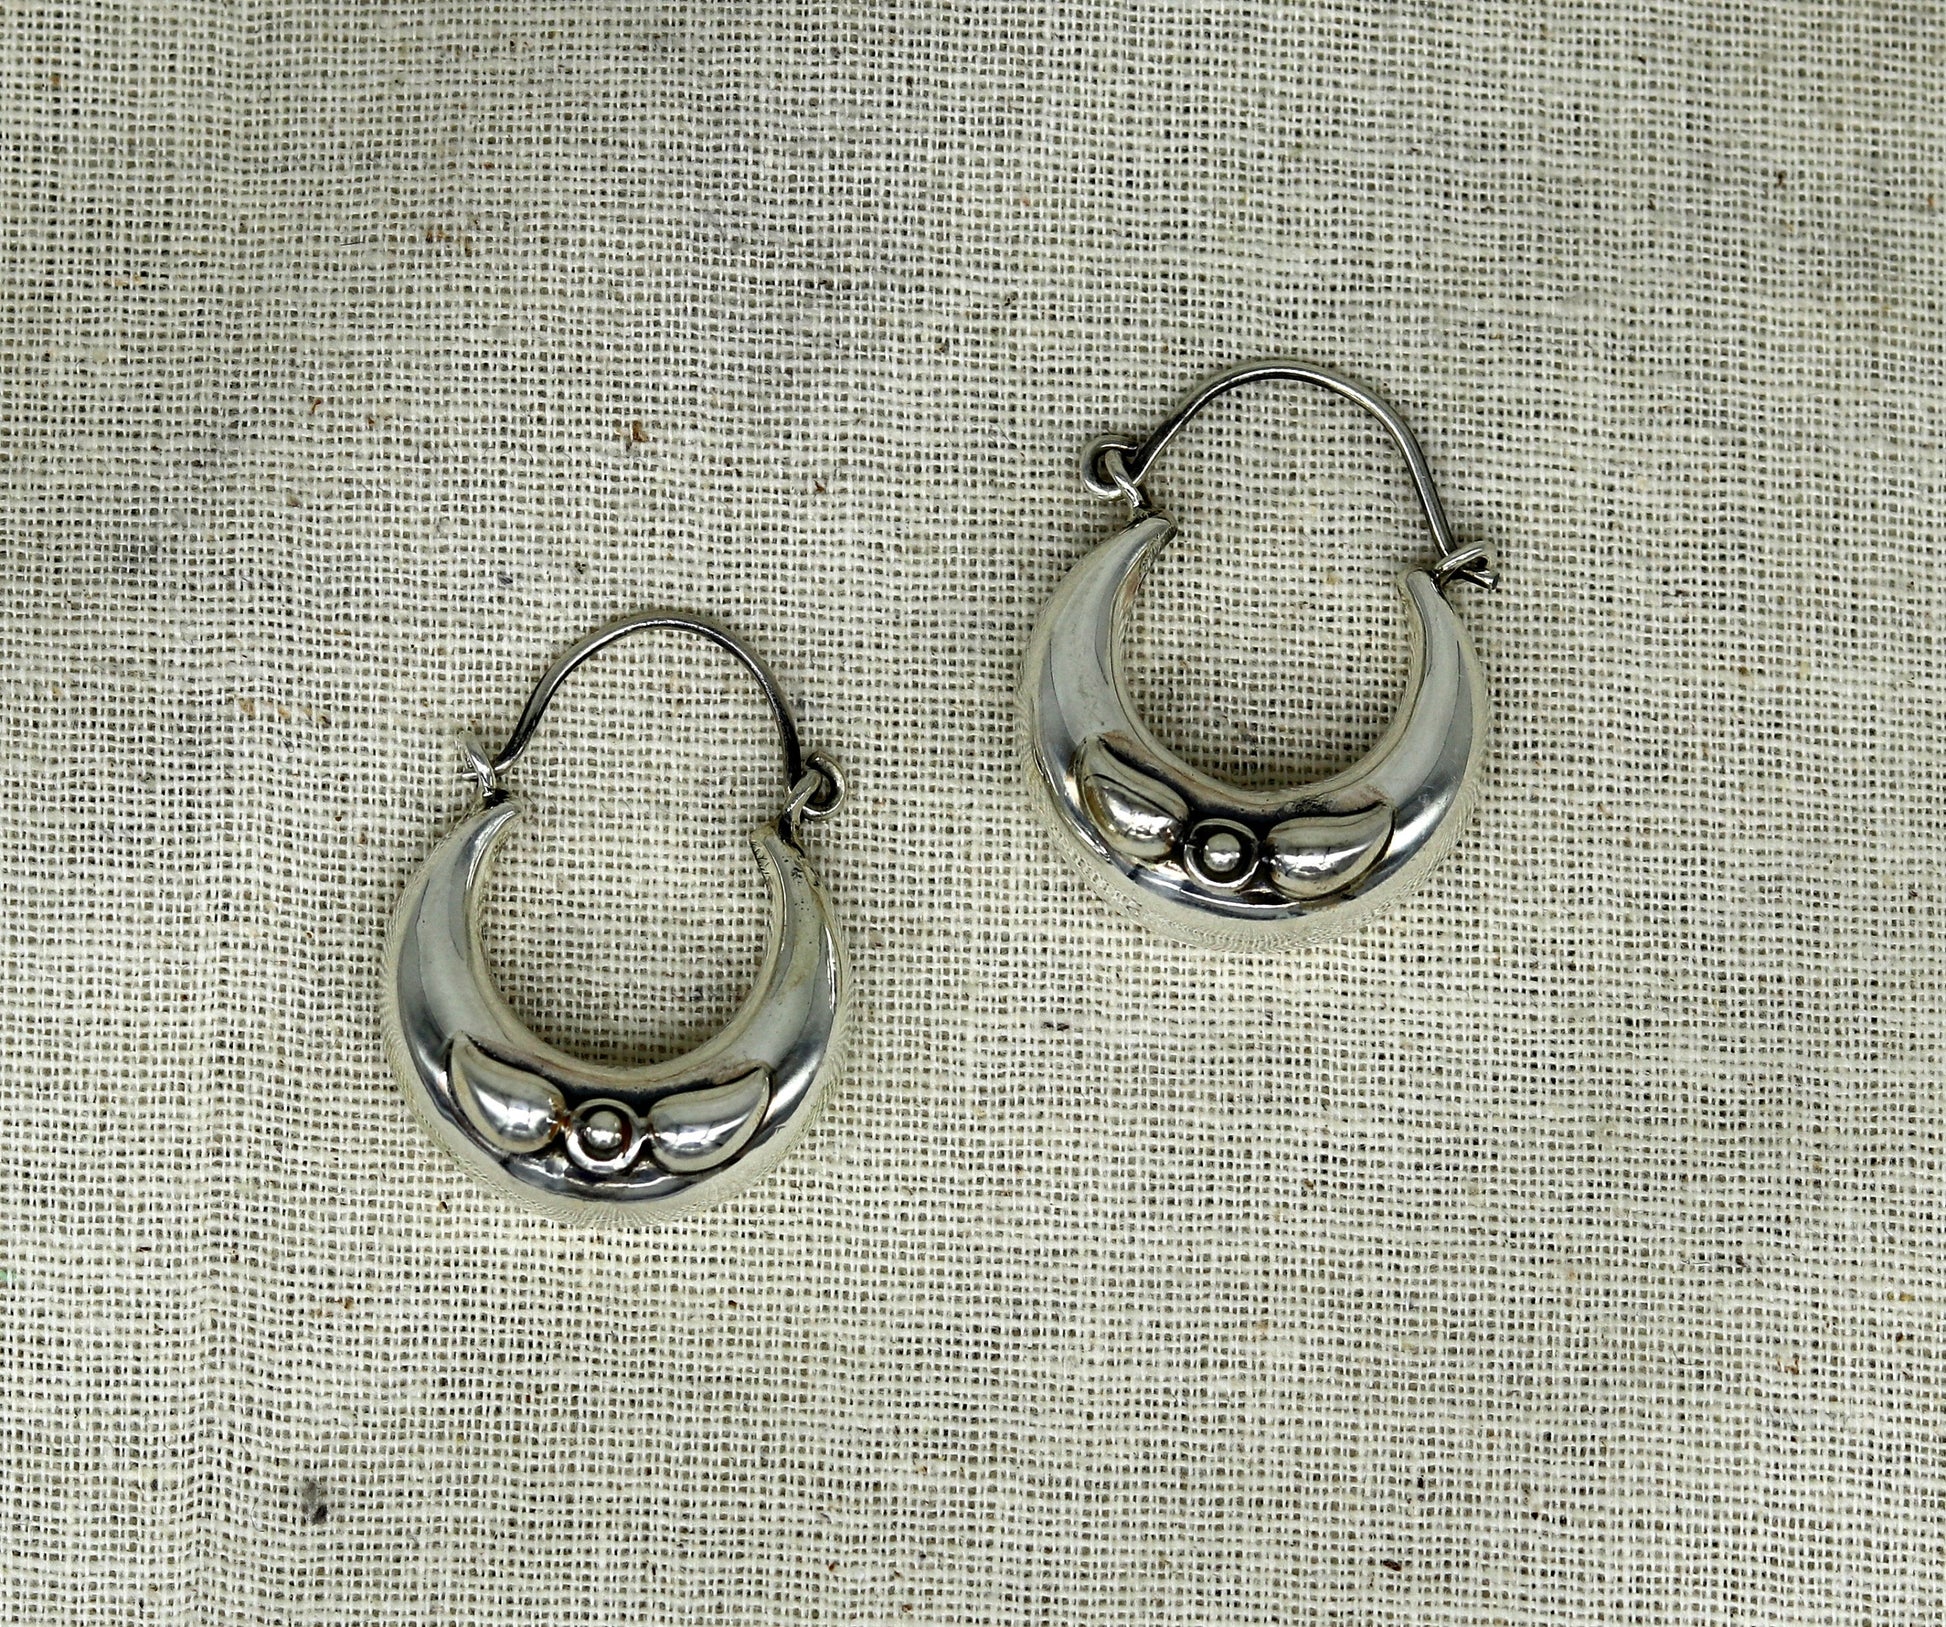 Handmade 925 sterling silver jewelry, fabulous vintage stylish customized hoops earrings bali tribal ethnic personalized jewelry ske17 - TRIBAL ORNAMENTS